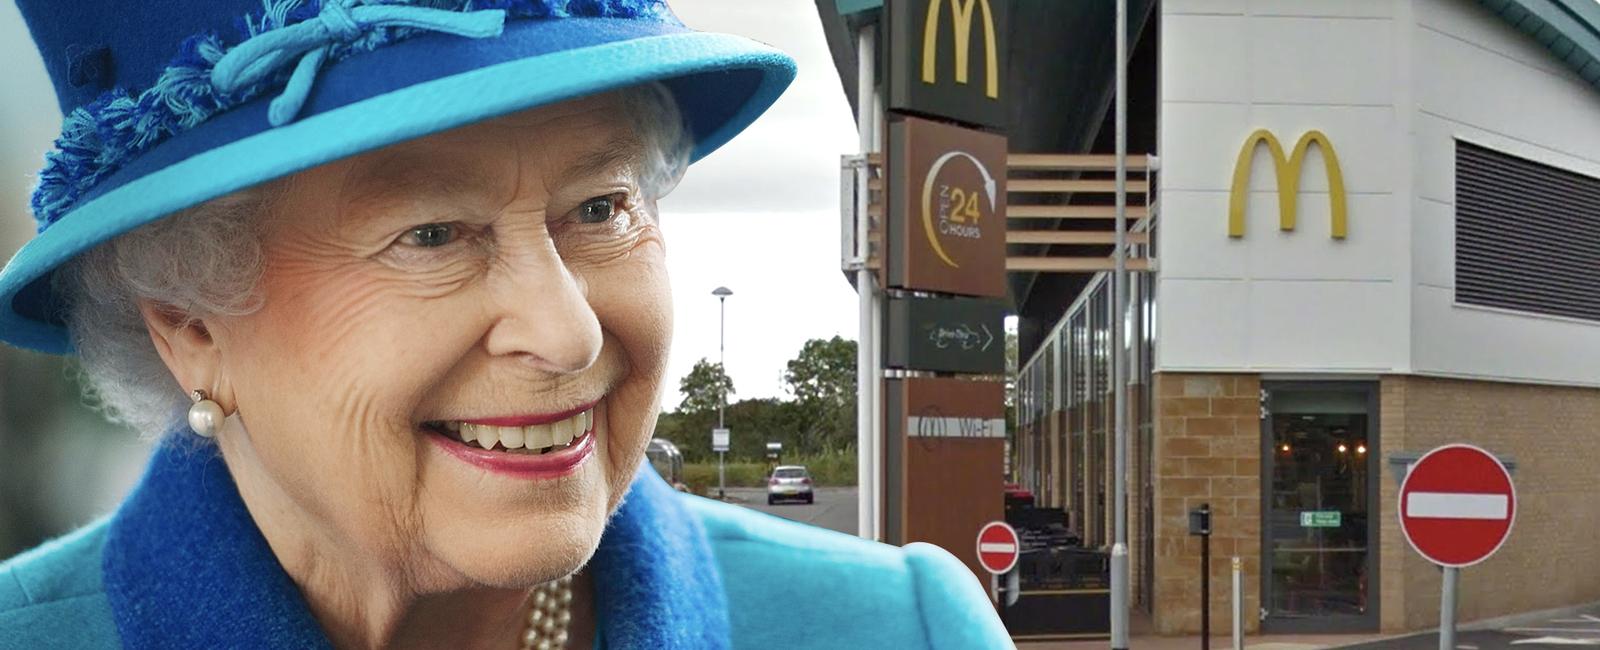 The queen of england owns a mcdonald s restaurant near buckingham palace